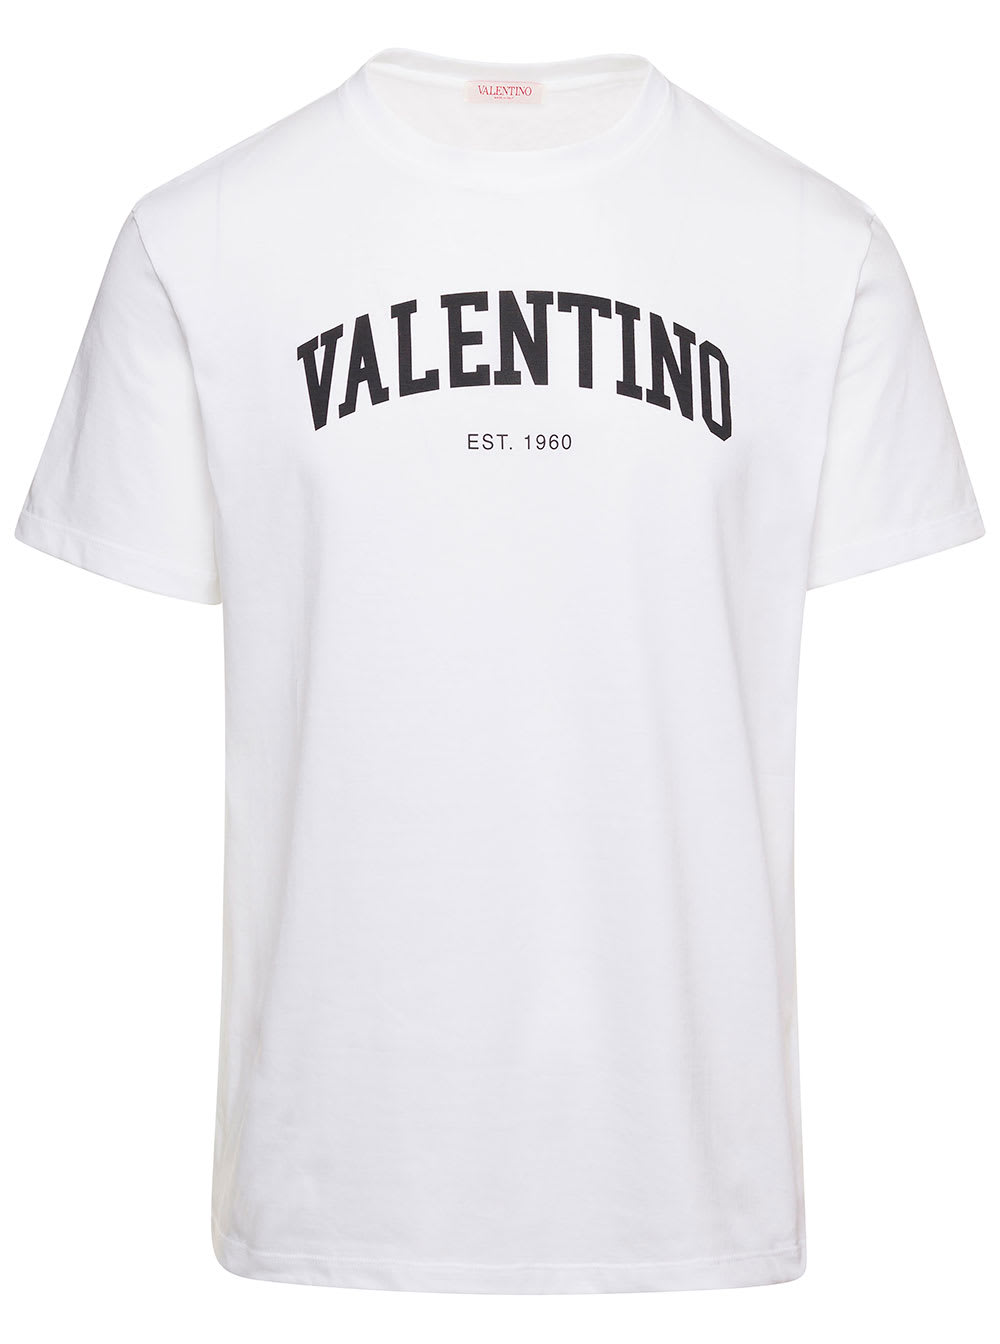 T-shirt Valentino Art. Jersey Cotone